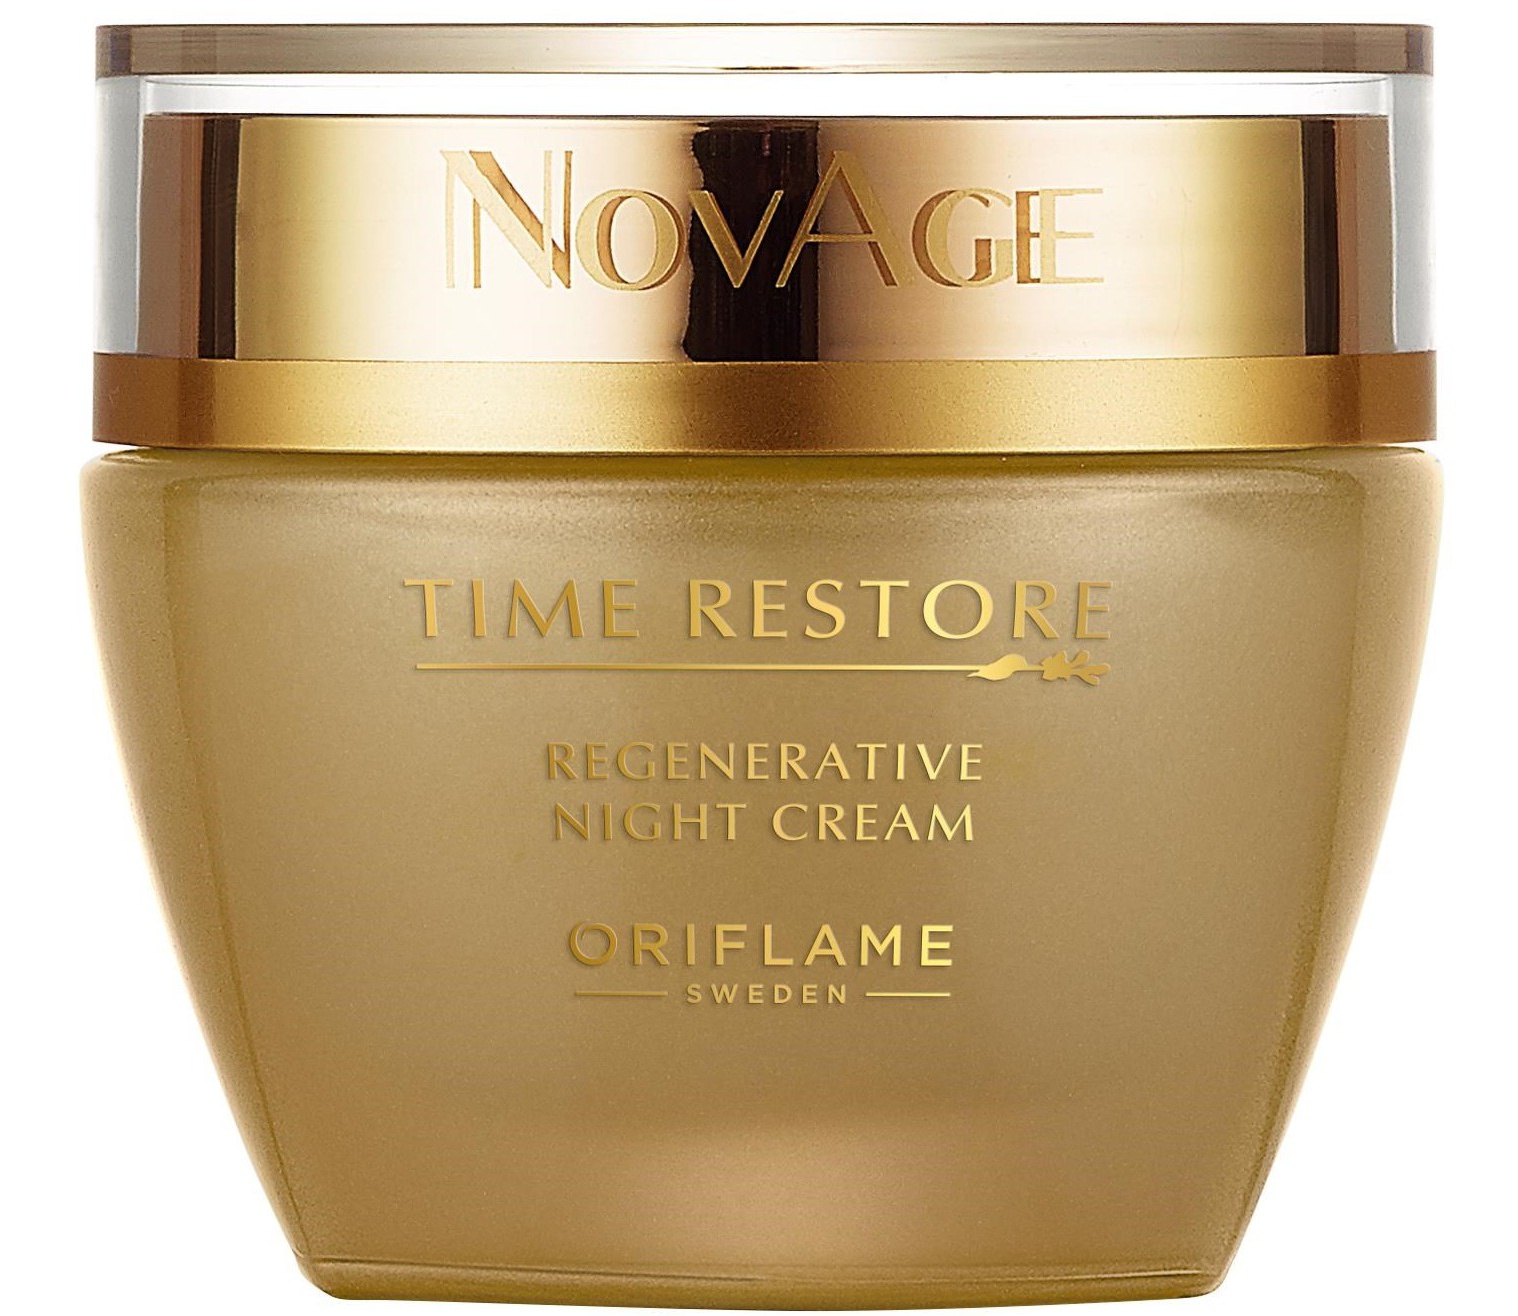 Oriflame Novage Time Restore Regenerative Night Cream